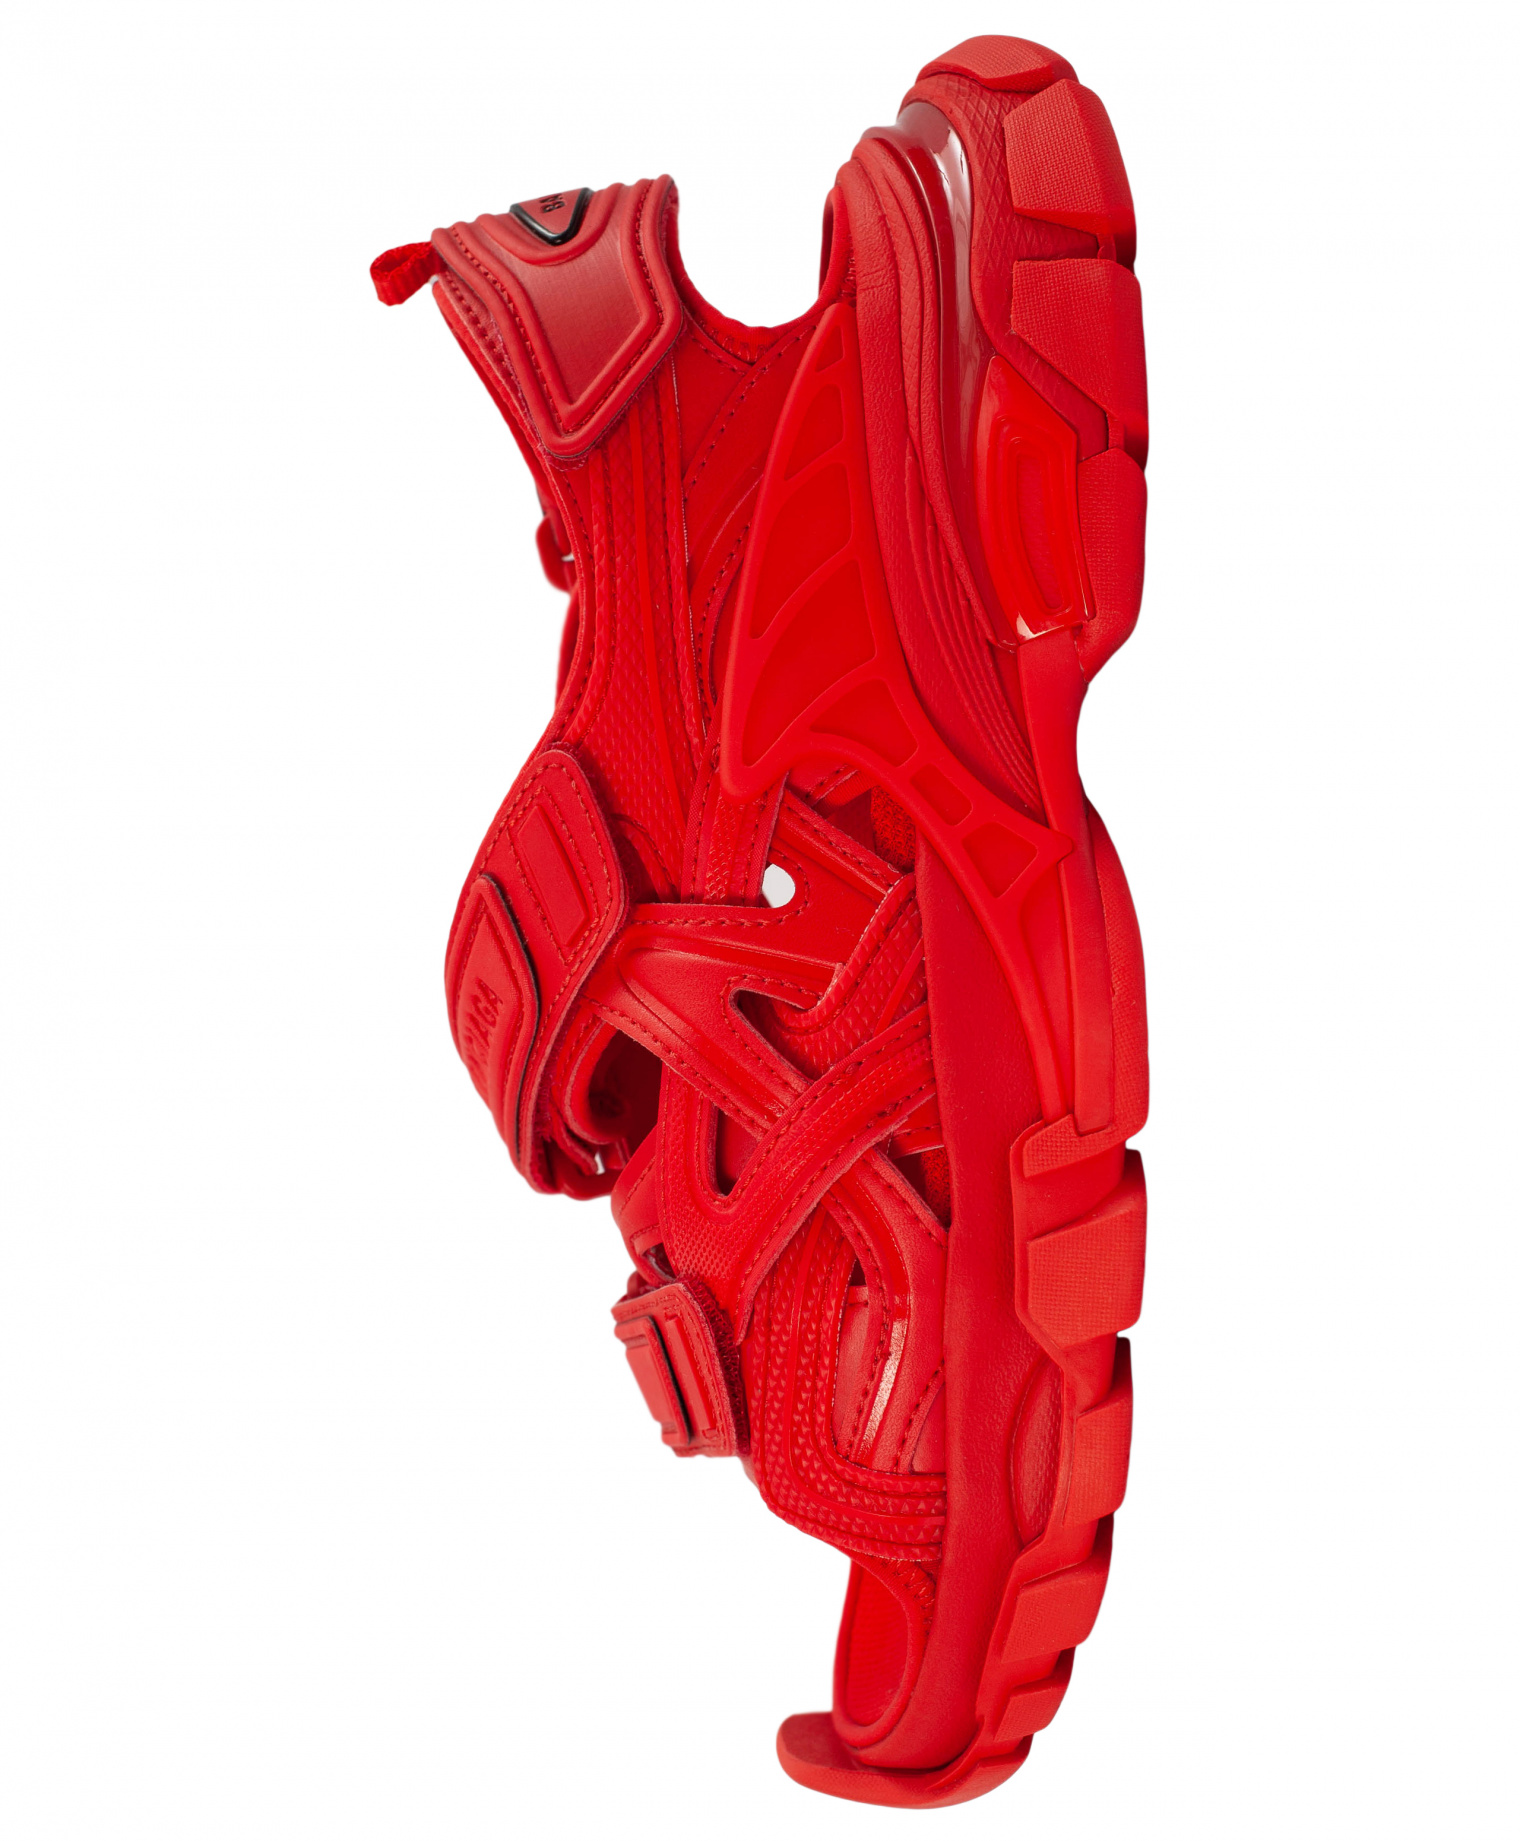 Balenciaga Red Track Sandals